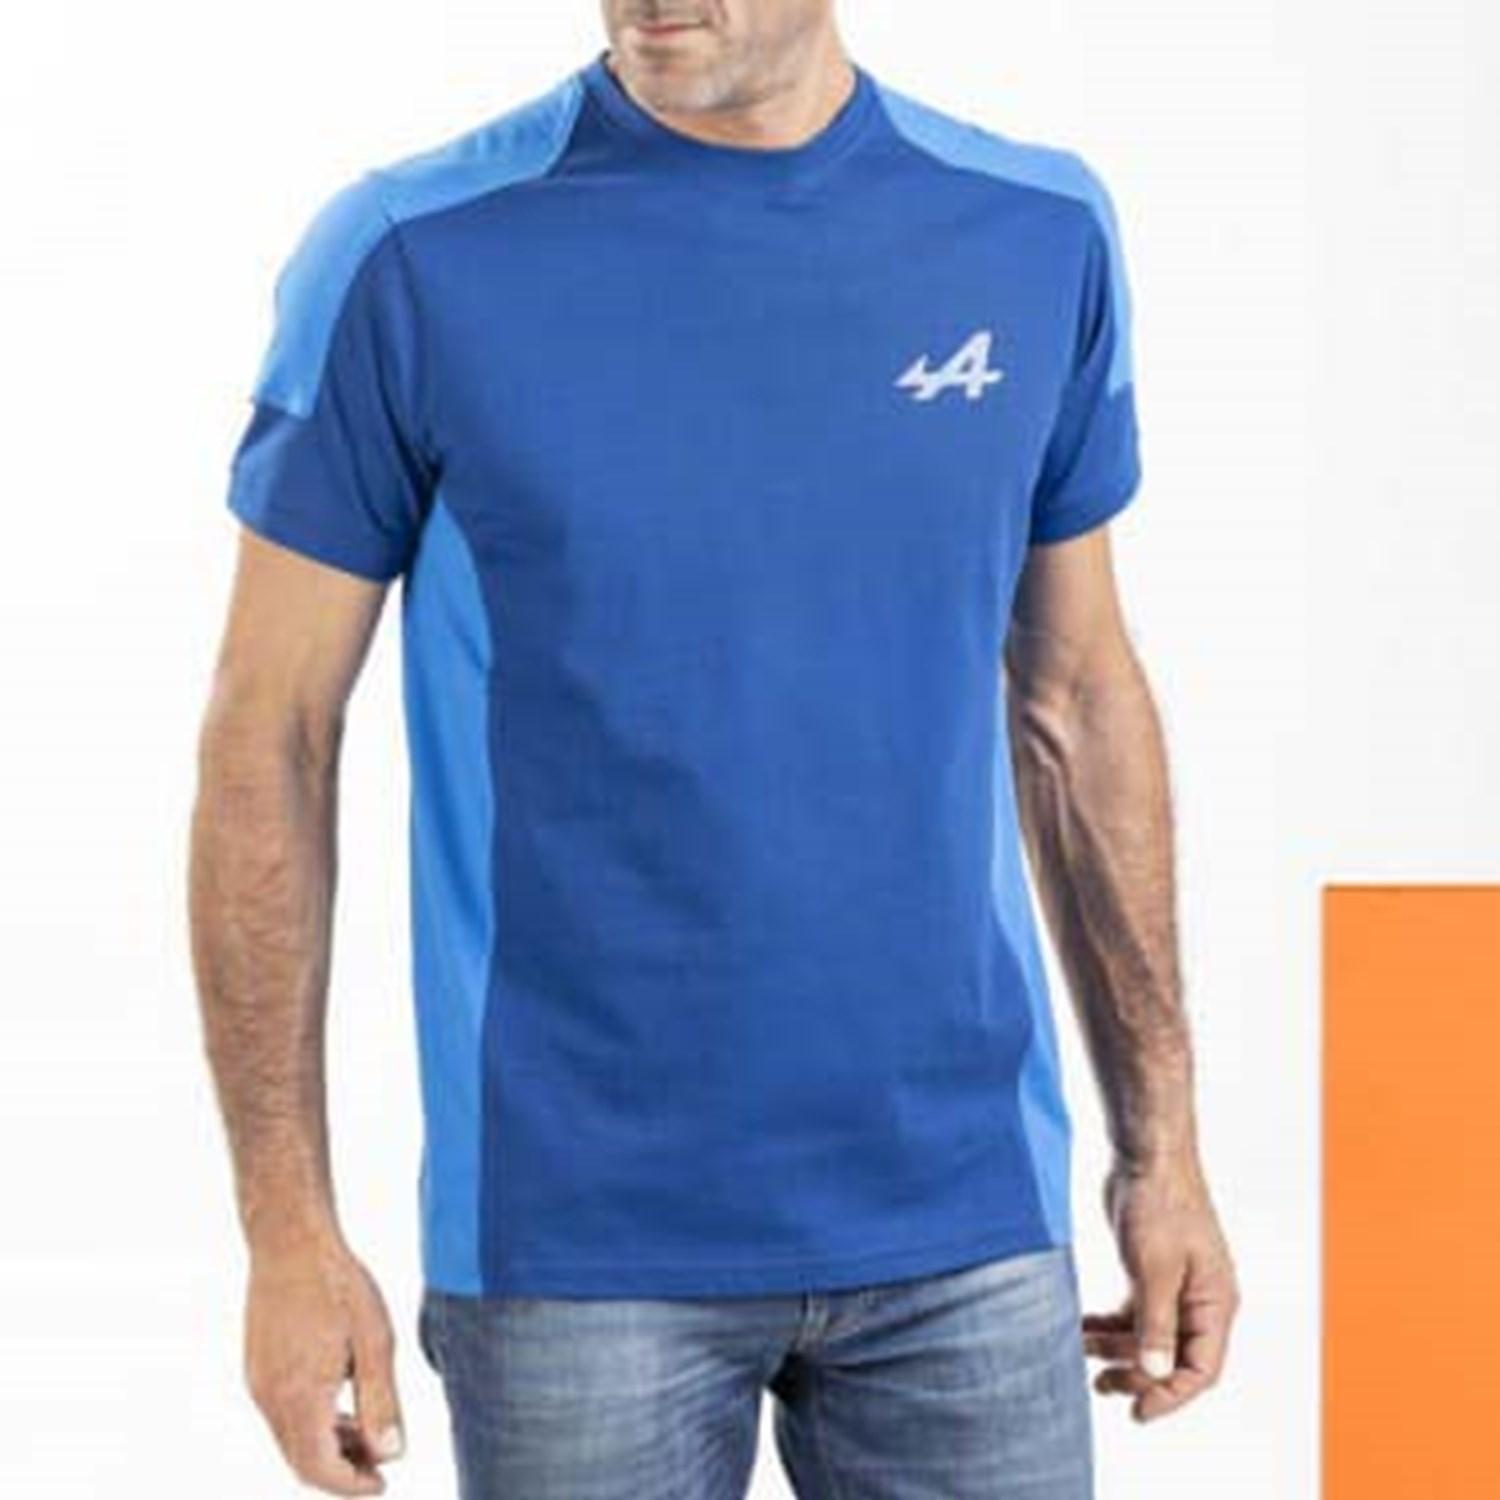 Men's Blue T-Shirt